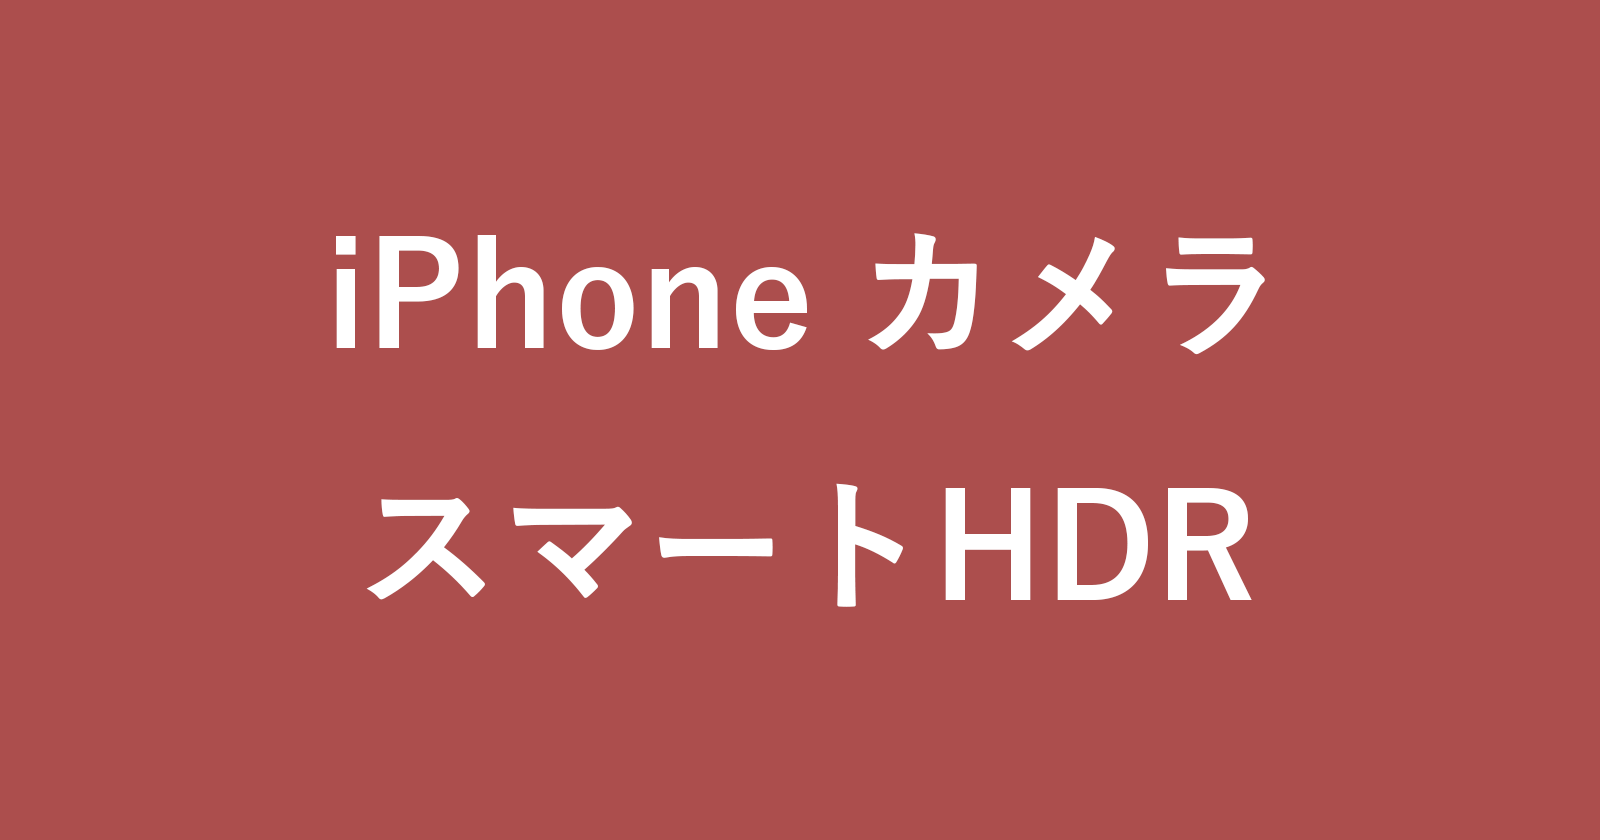 iphone camera hdr